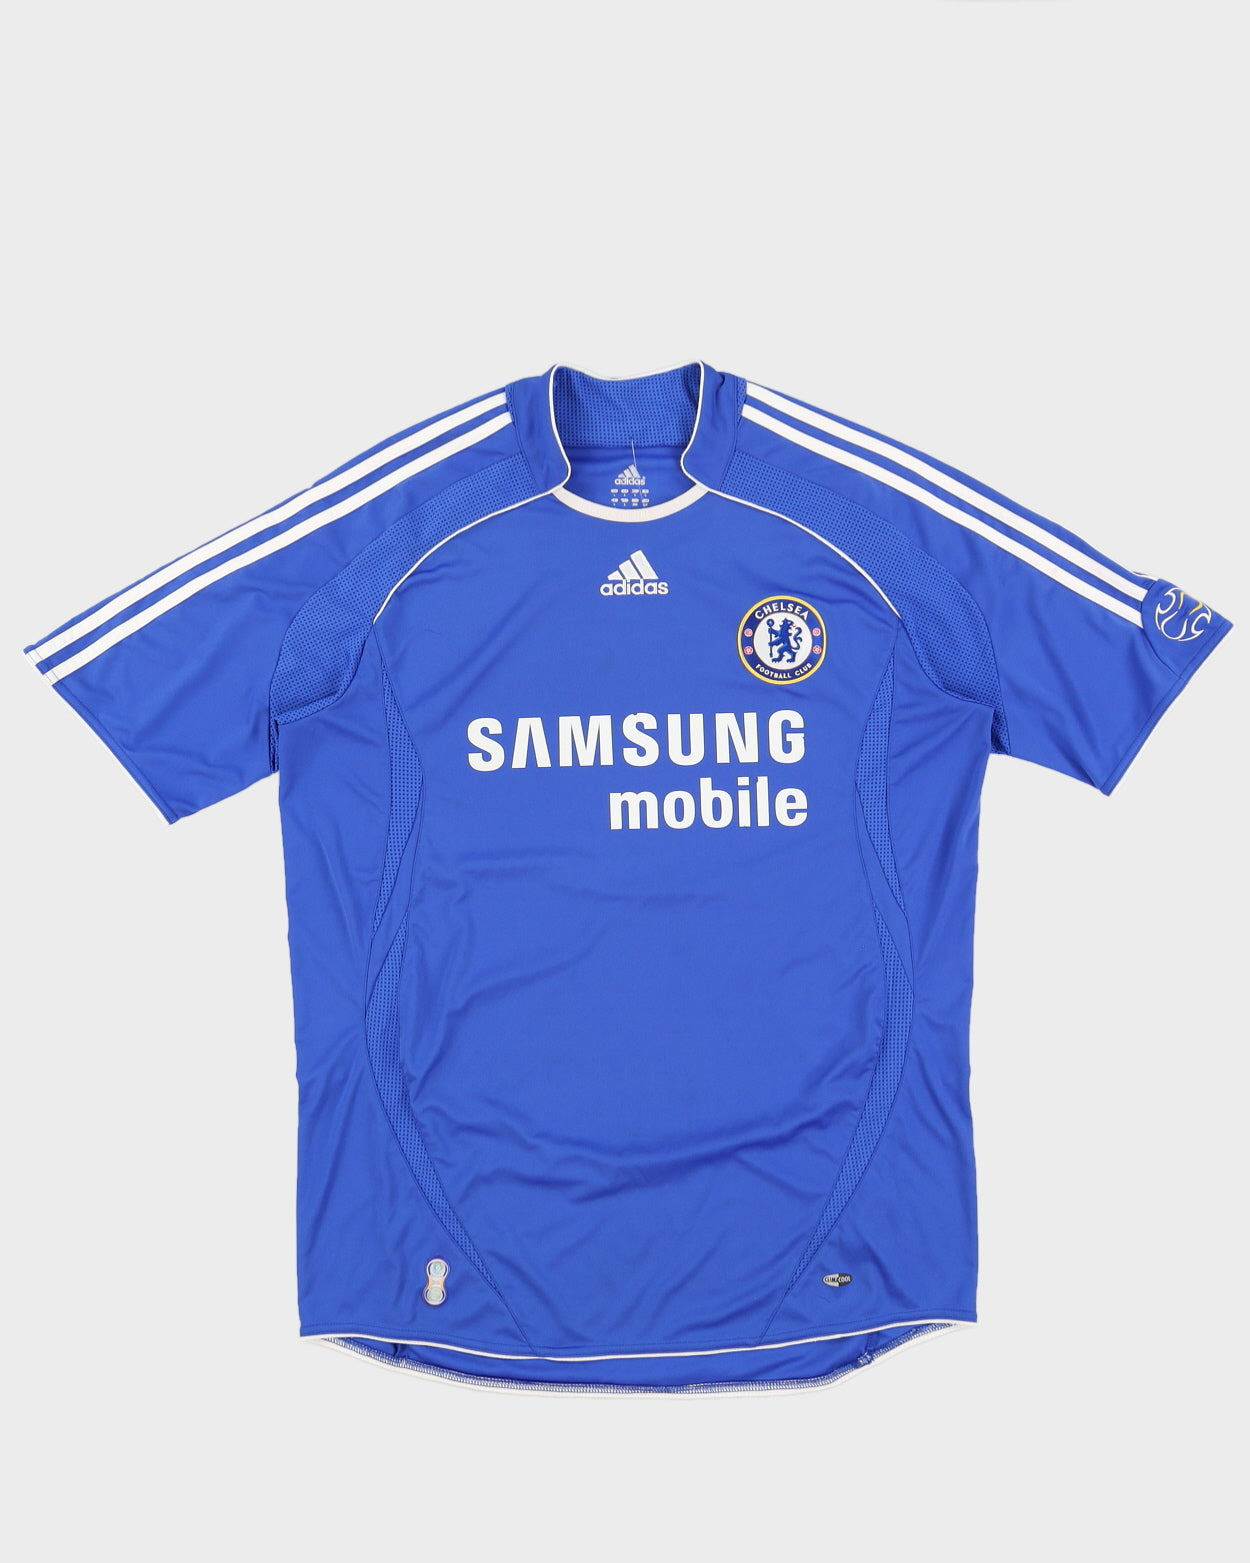 2006-07 Adidas Chelsea FC Home Football Shirt - L